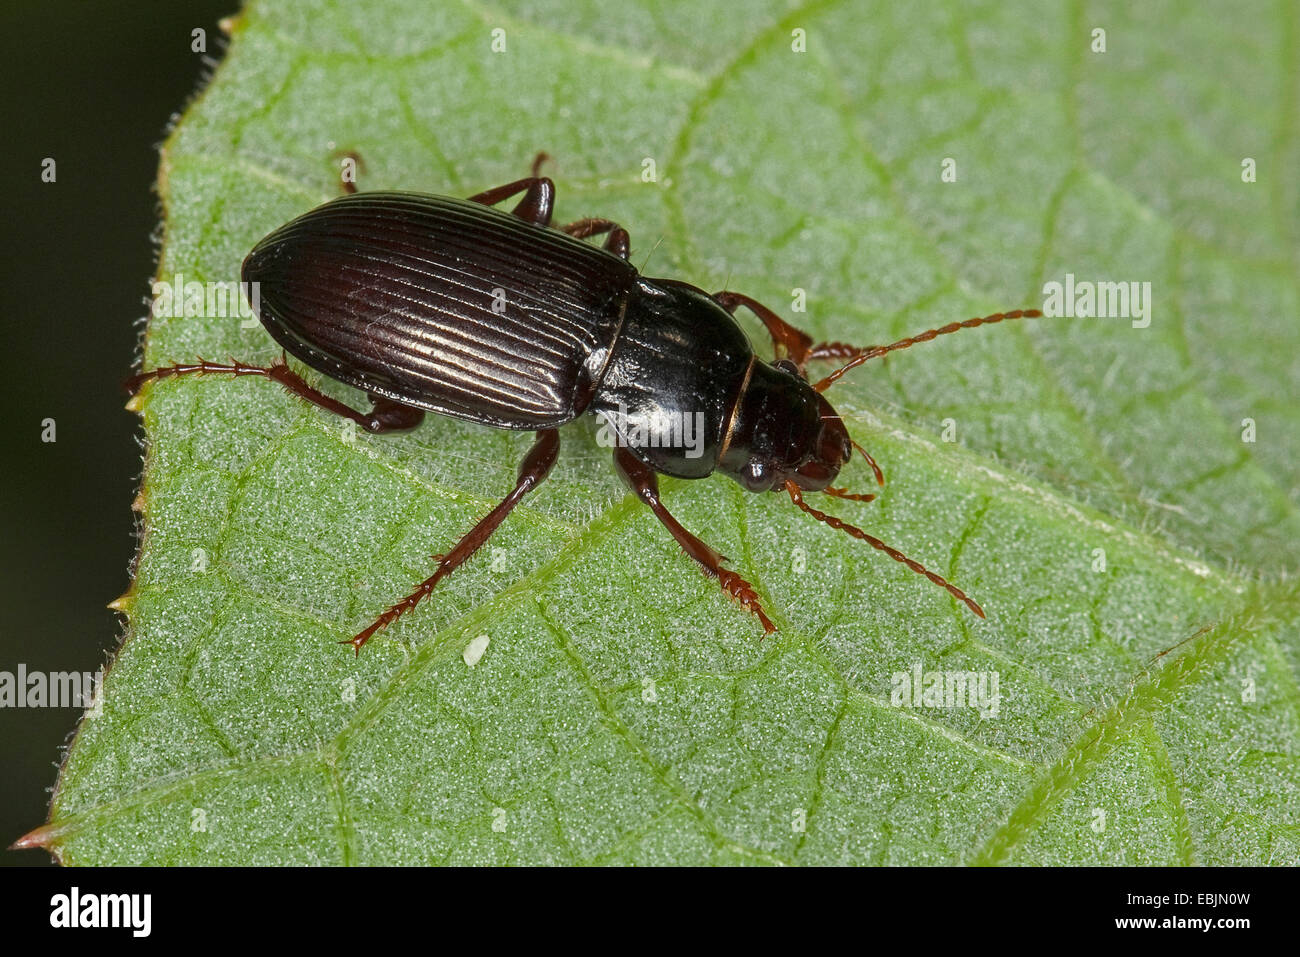 Magnificent sun beetle (Amara aulica, Curtonotus aulica), sitting on a leaf, Germany Stock Photo